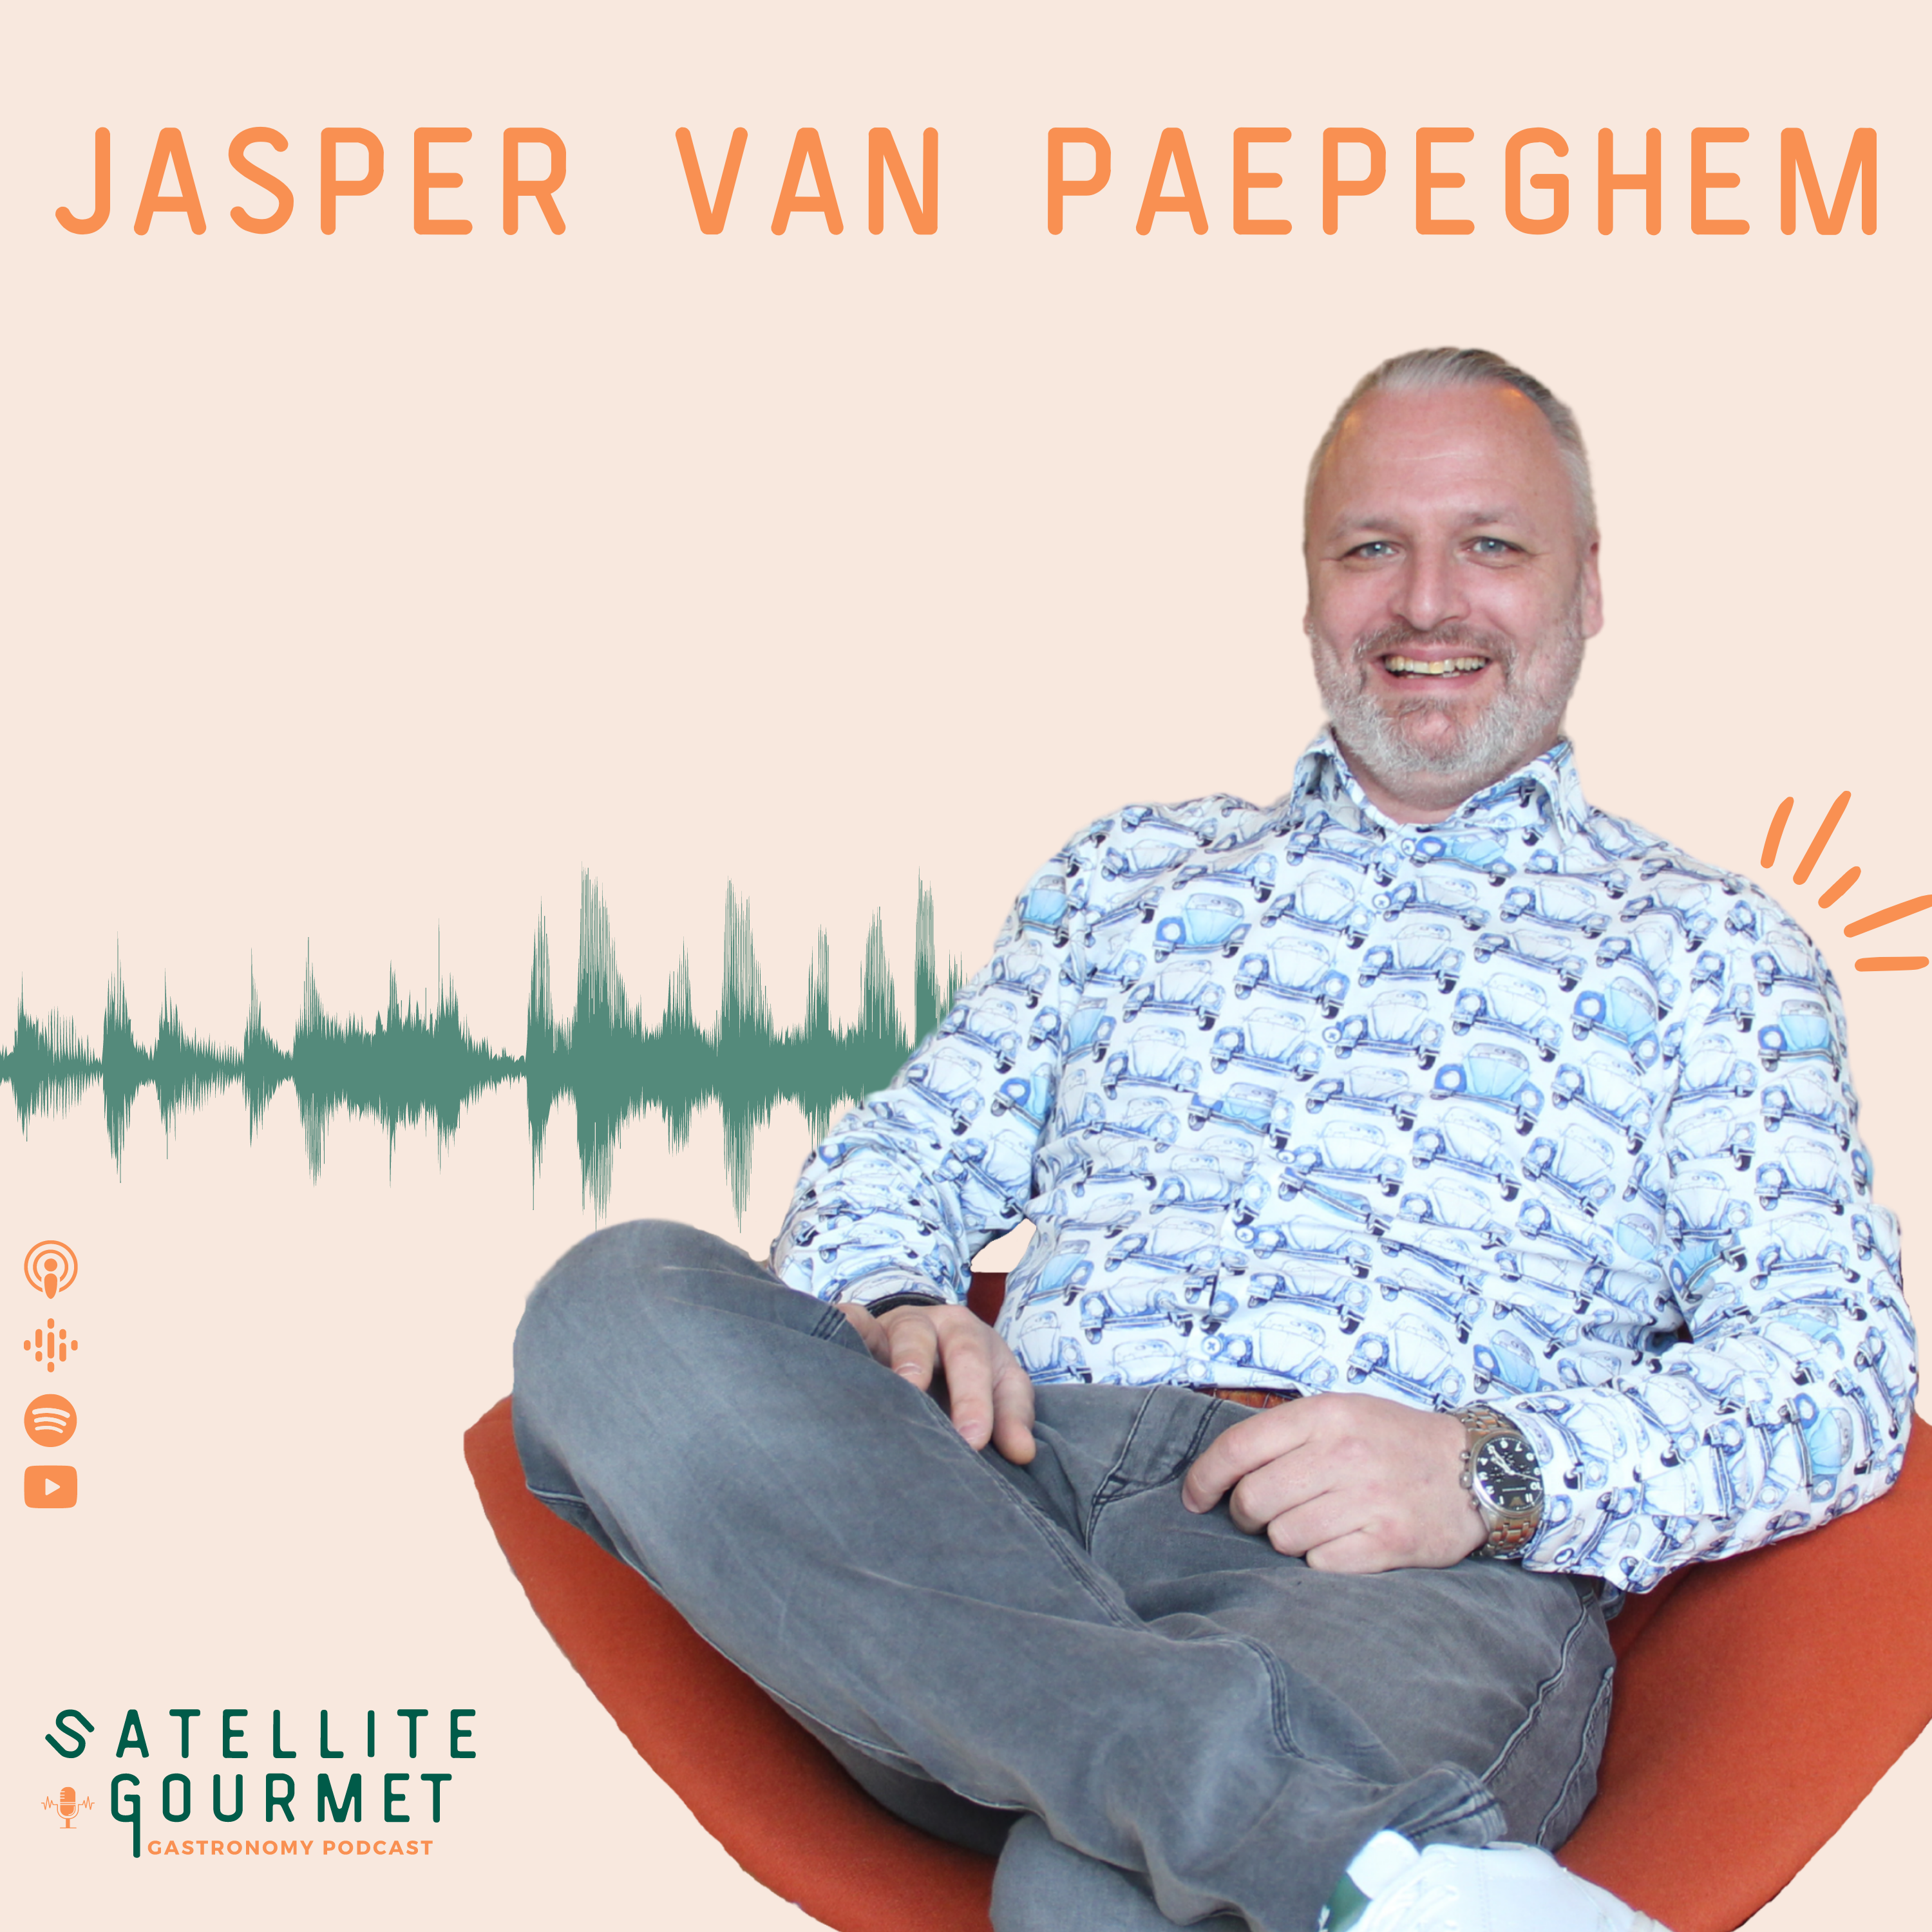 Jazzper Van Papeghem